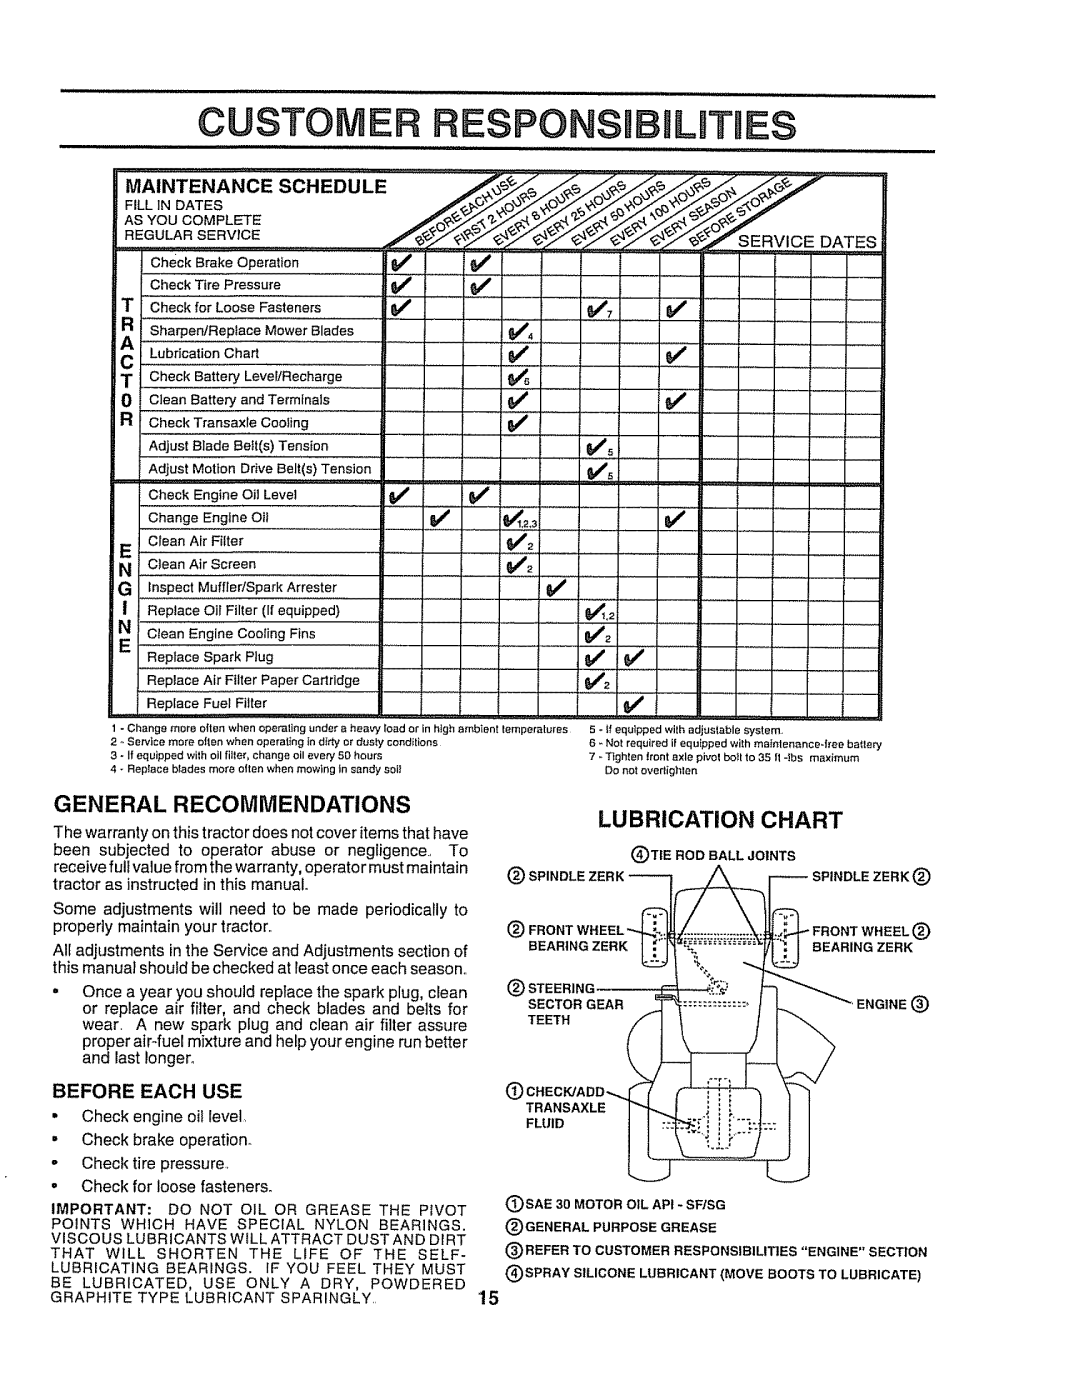 Craftsman 917O251550 CUSTOMER RESPONSmBIUTIES, v, e, e Ks, Lubrication Chart, F,Ll,Ndates, Check Battery kevel/Rech,ar,g 